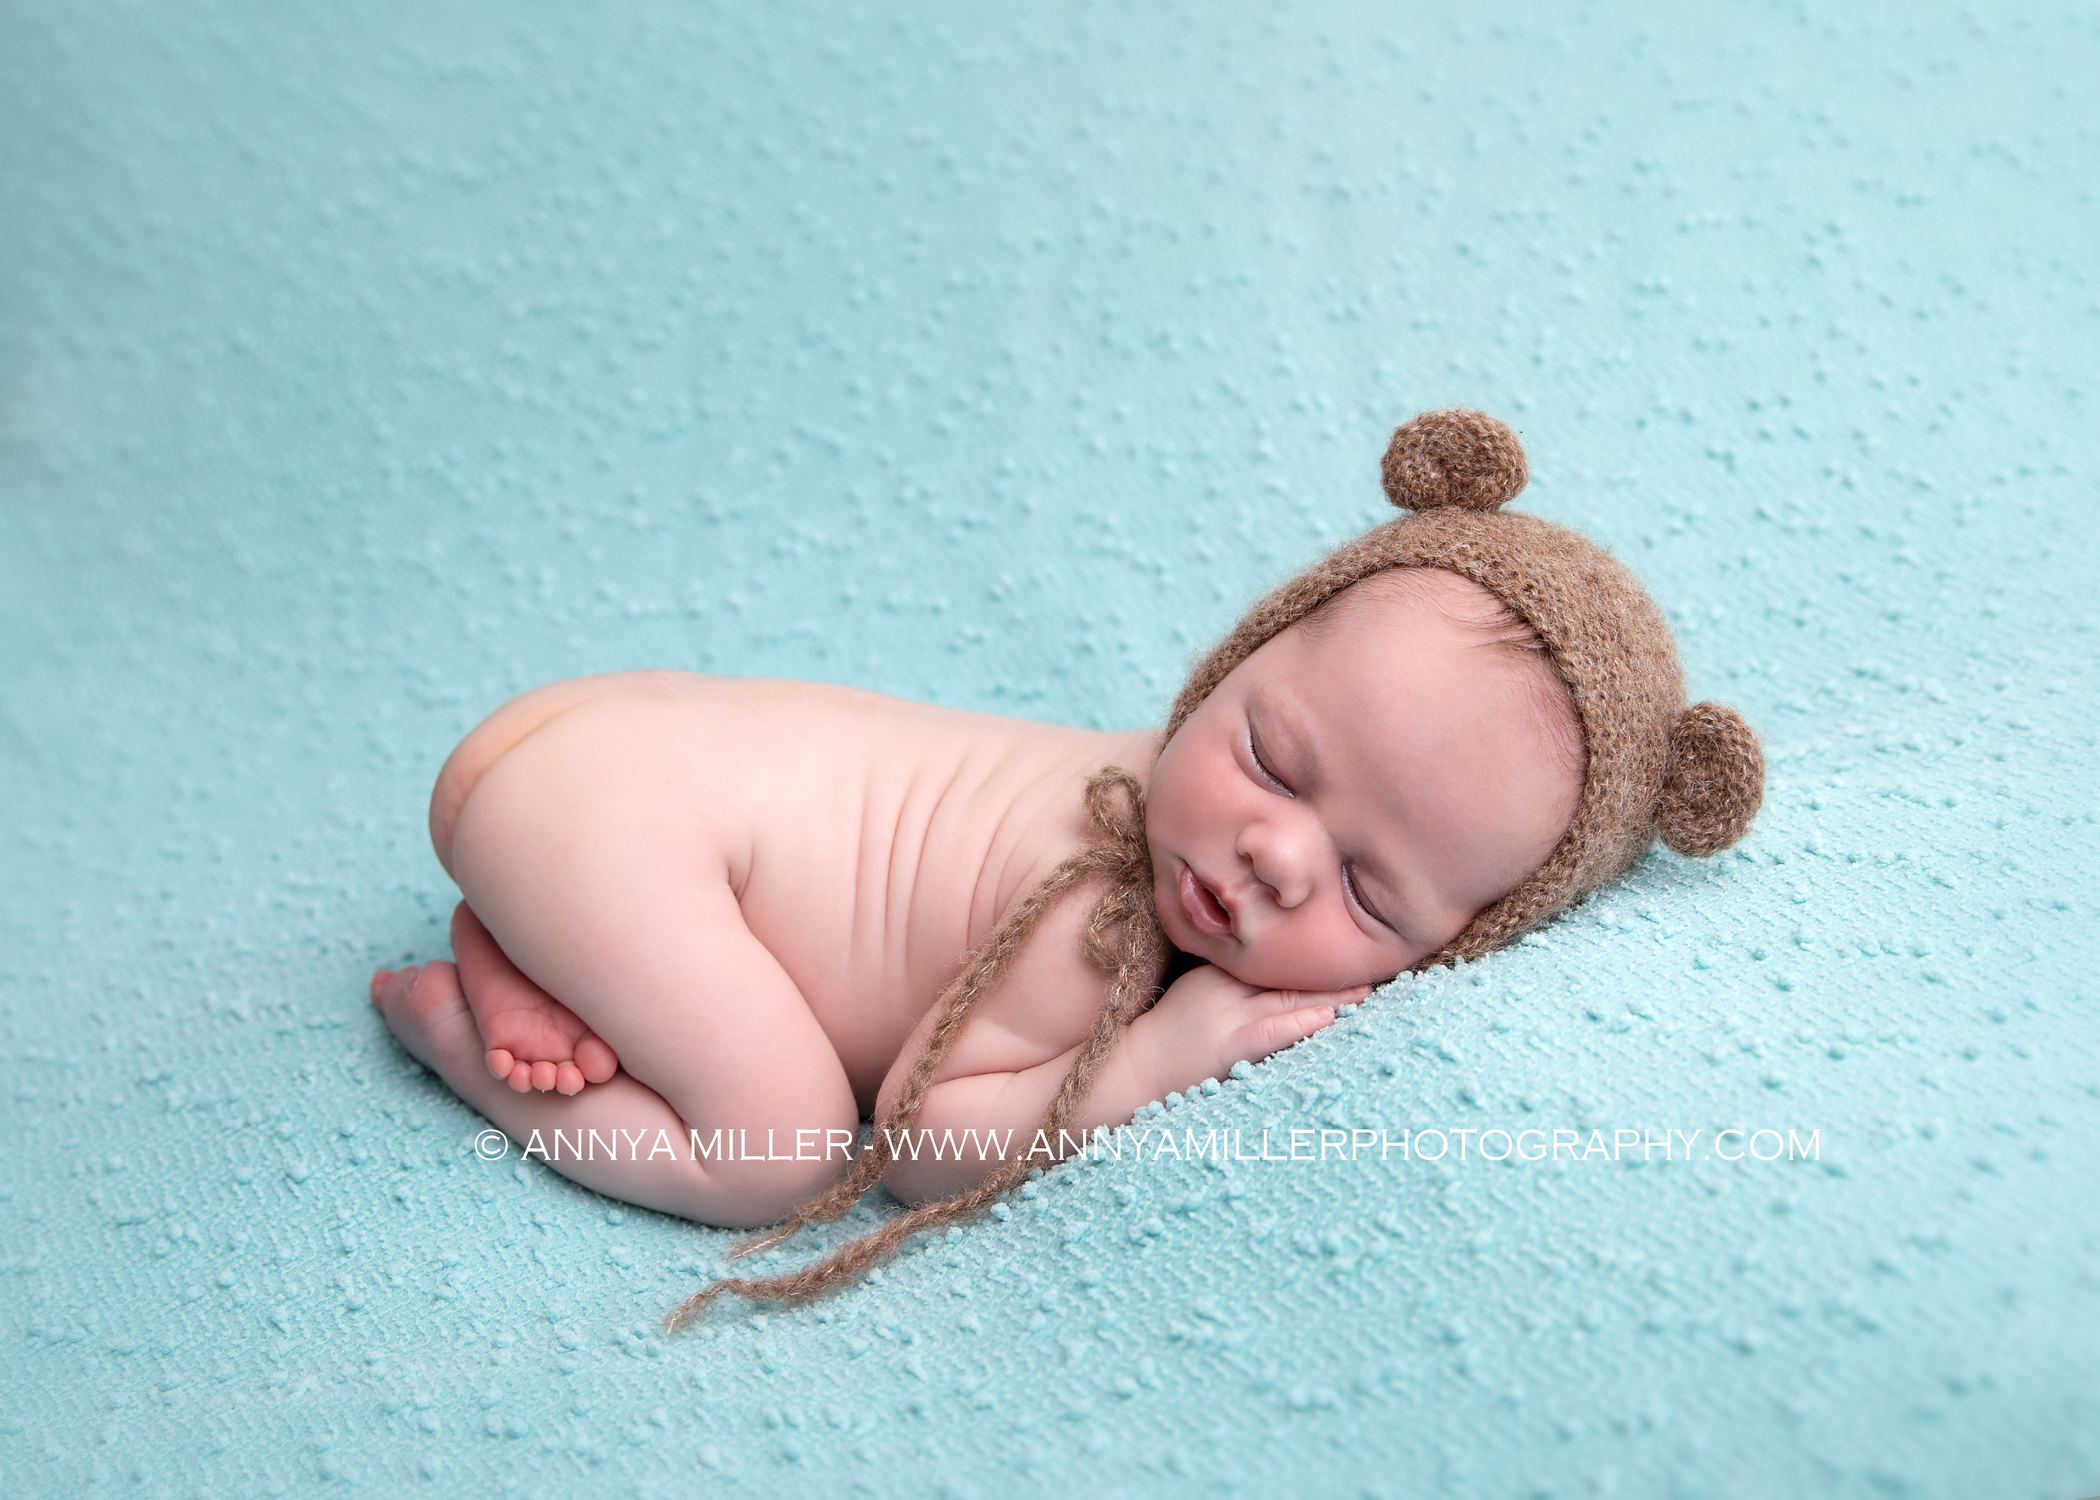 Portraits of baby boy in bear hat by ajax newborn photographer Annya miller 